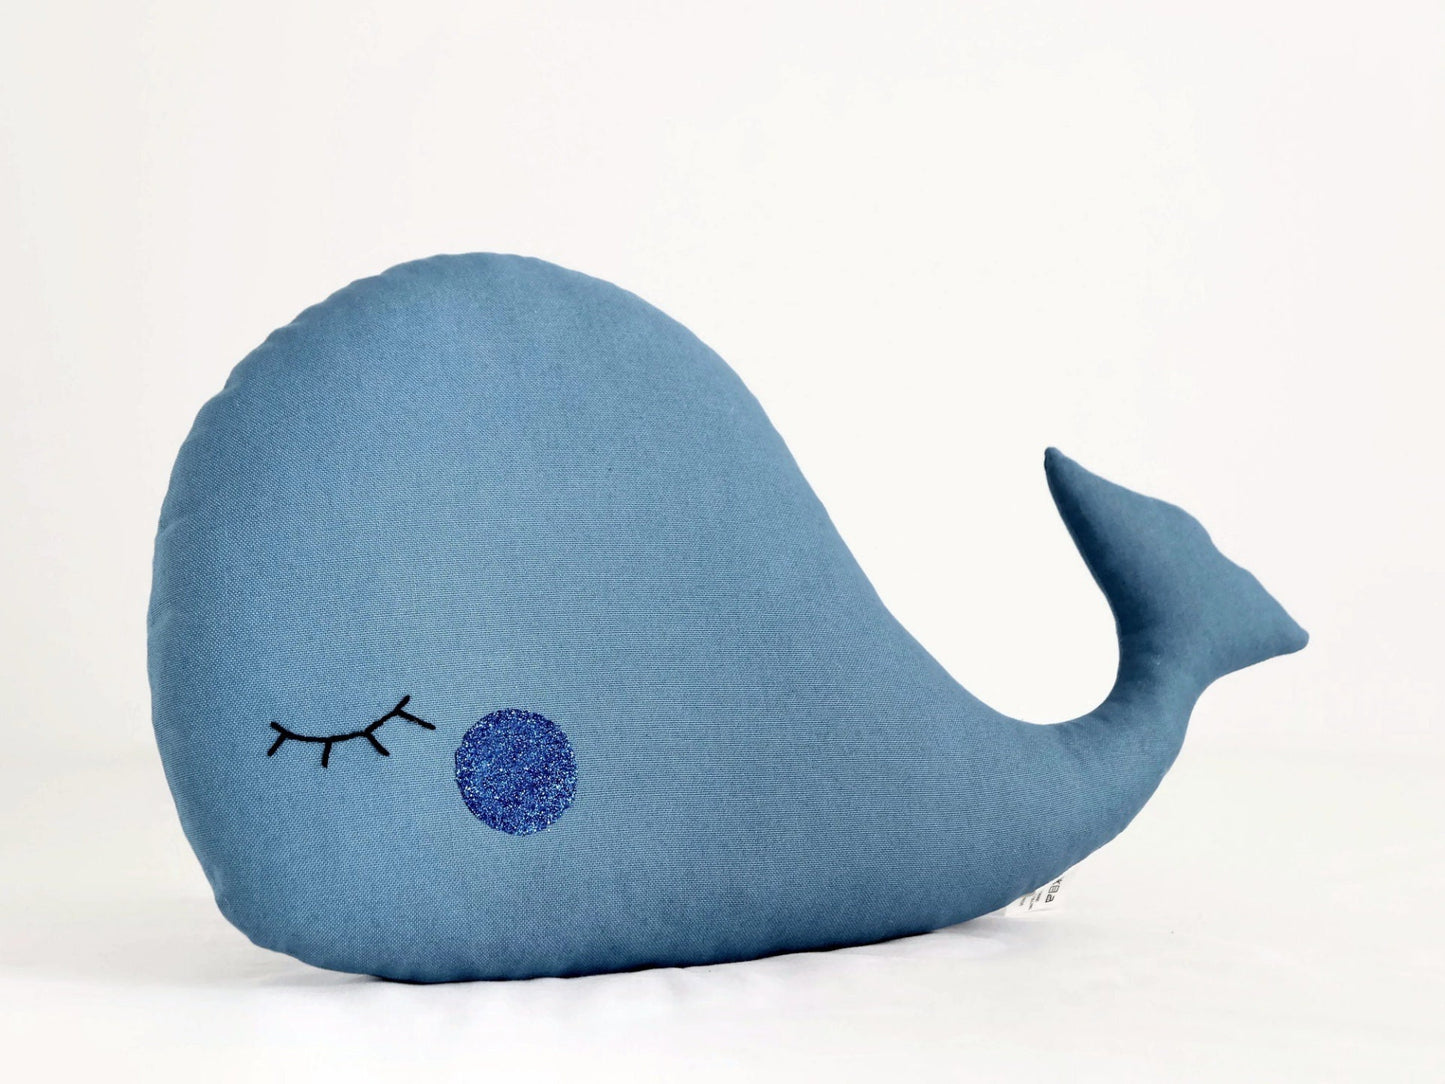 Petrol Blue Whale Pillow